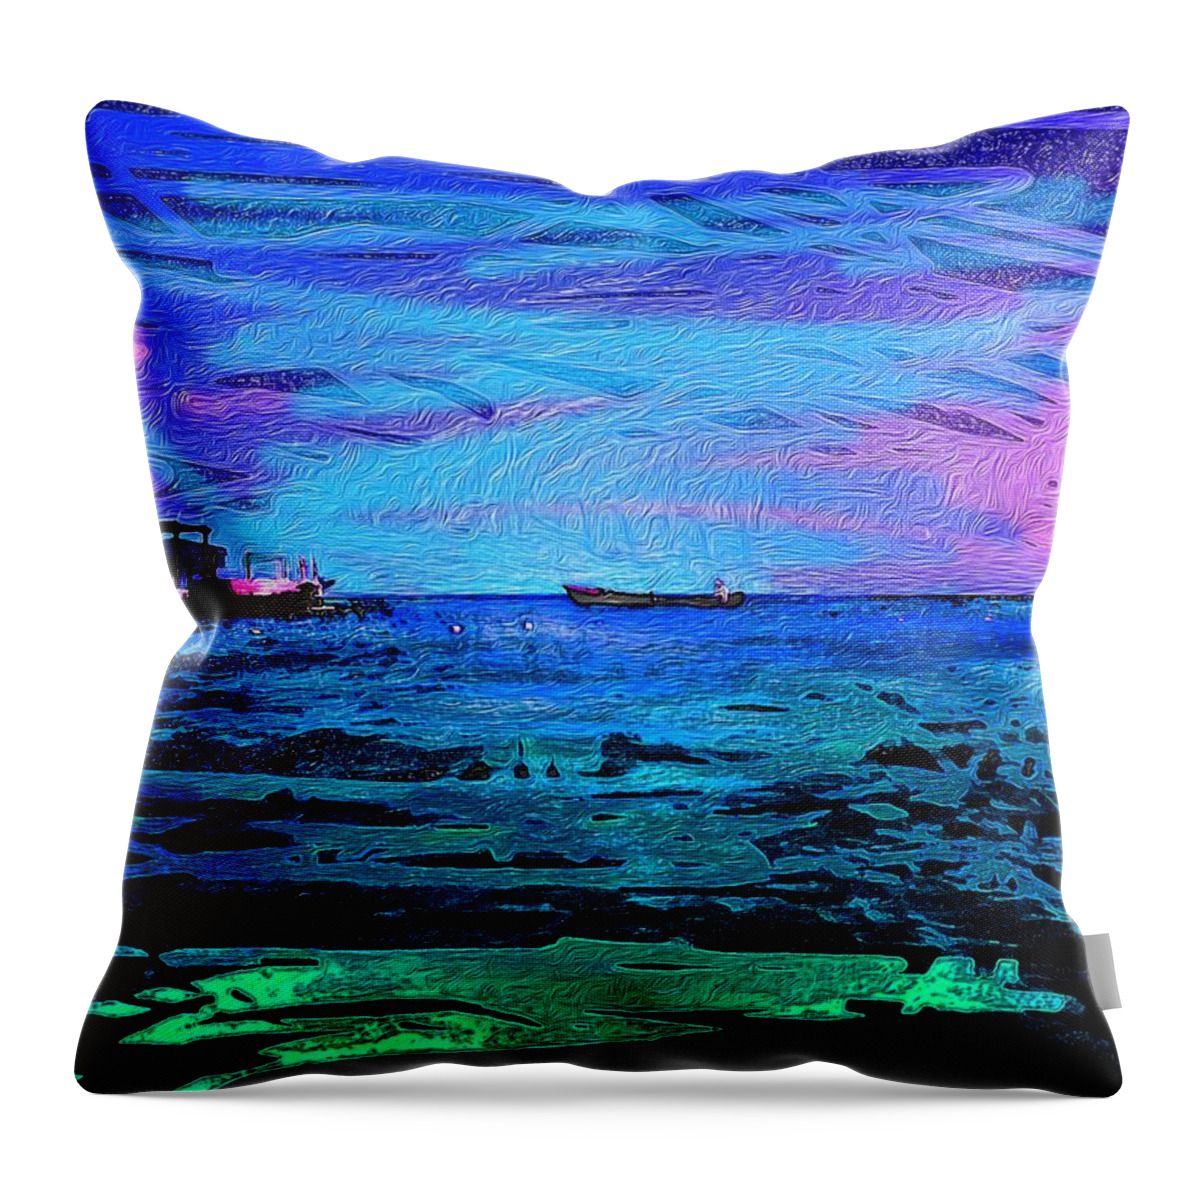 Ocean Stars 2 Throw Pillow featuring the digital art Ocean Stars 2 by Aldane Wynter